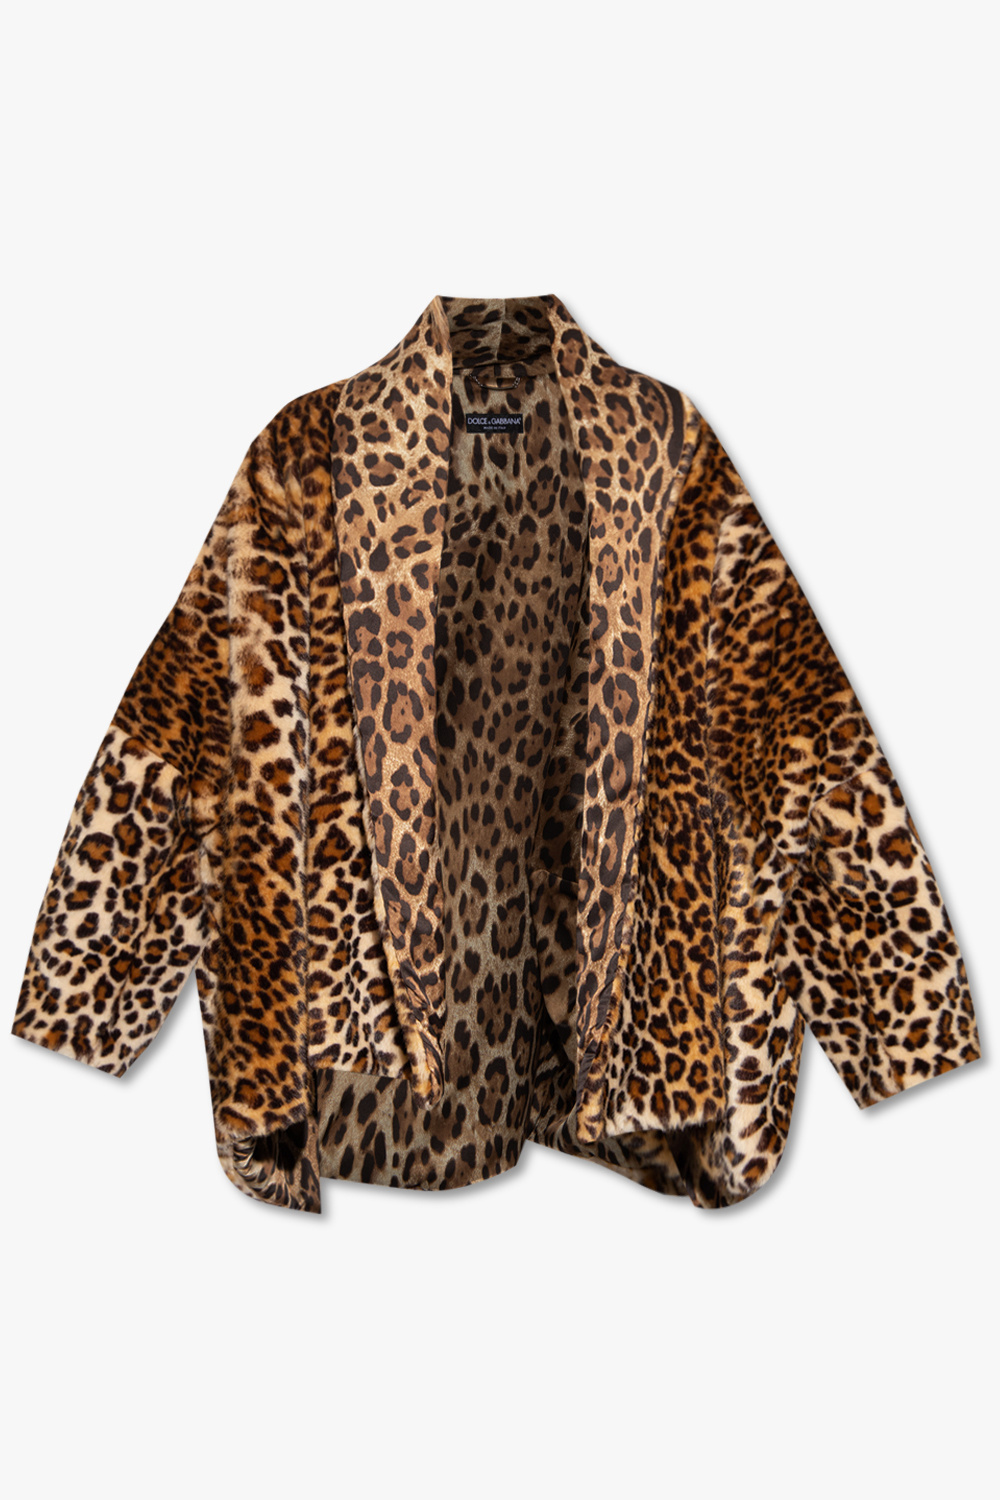 Dolce & Gabbana Leopard-printed coat, Women's Clothing